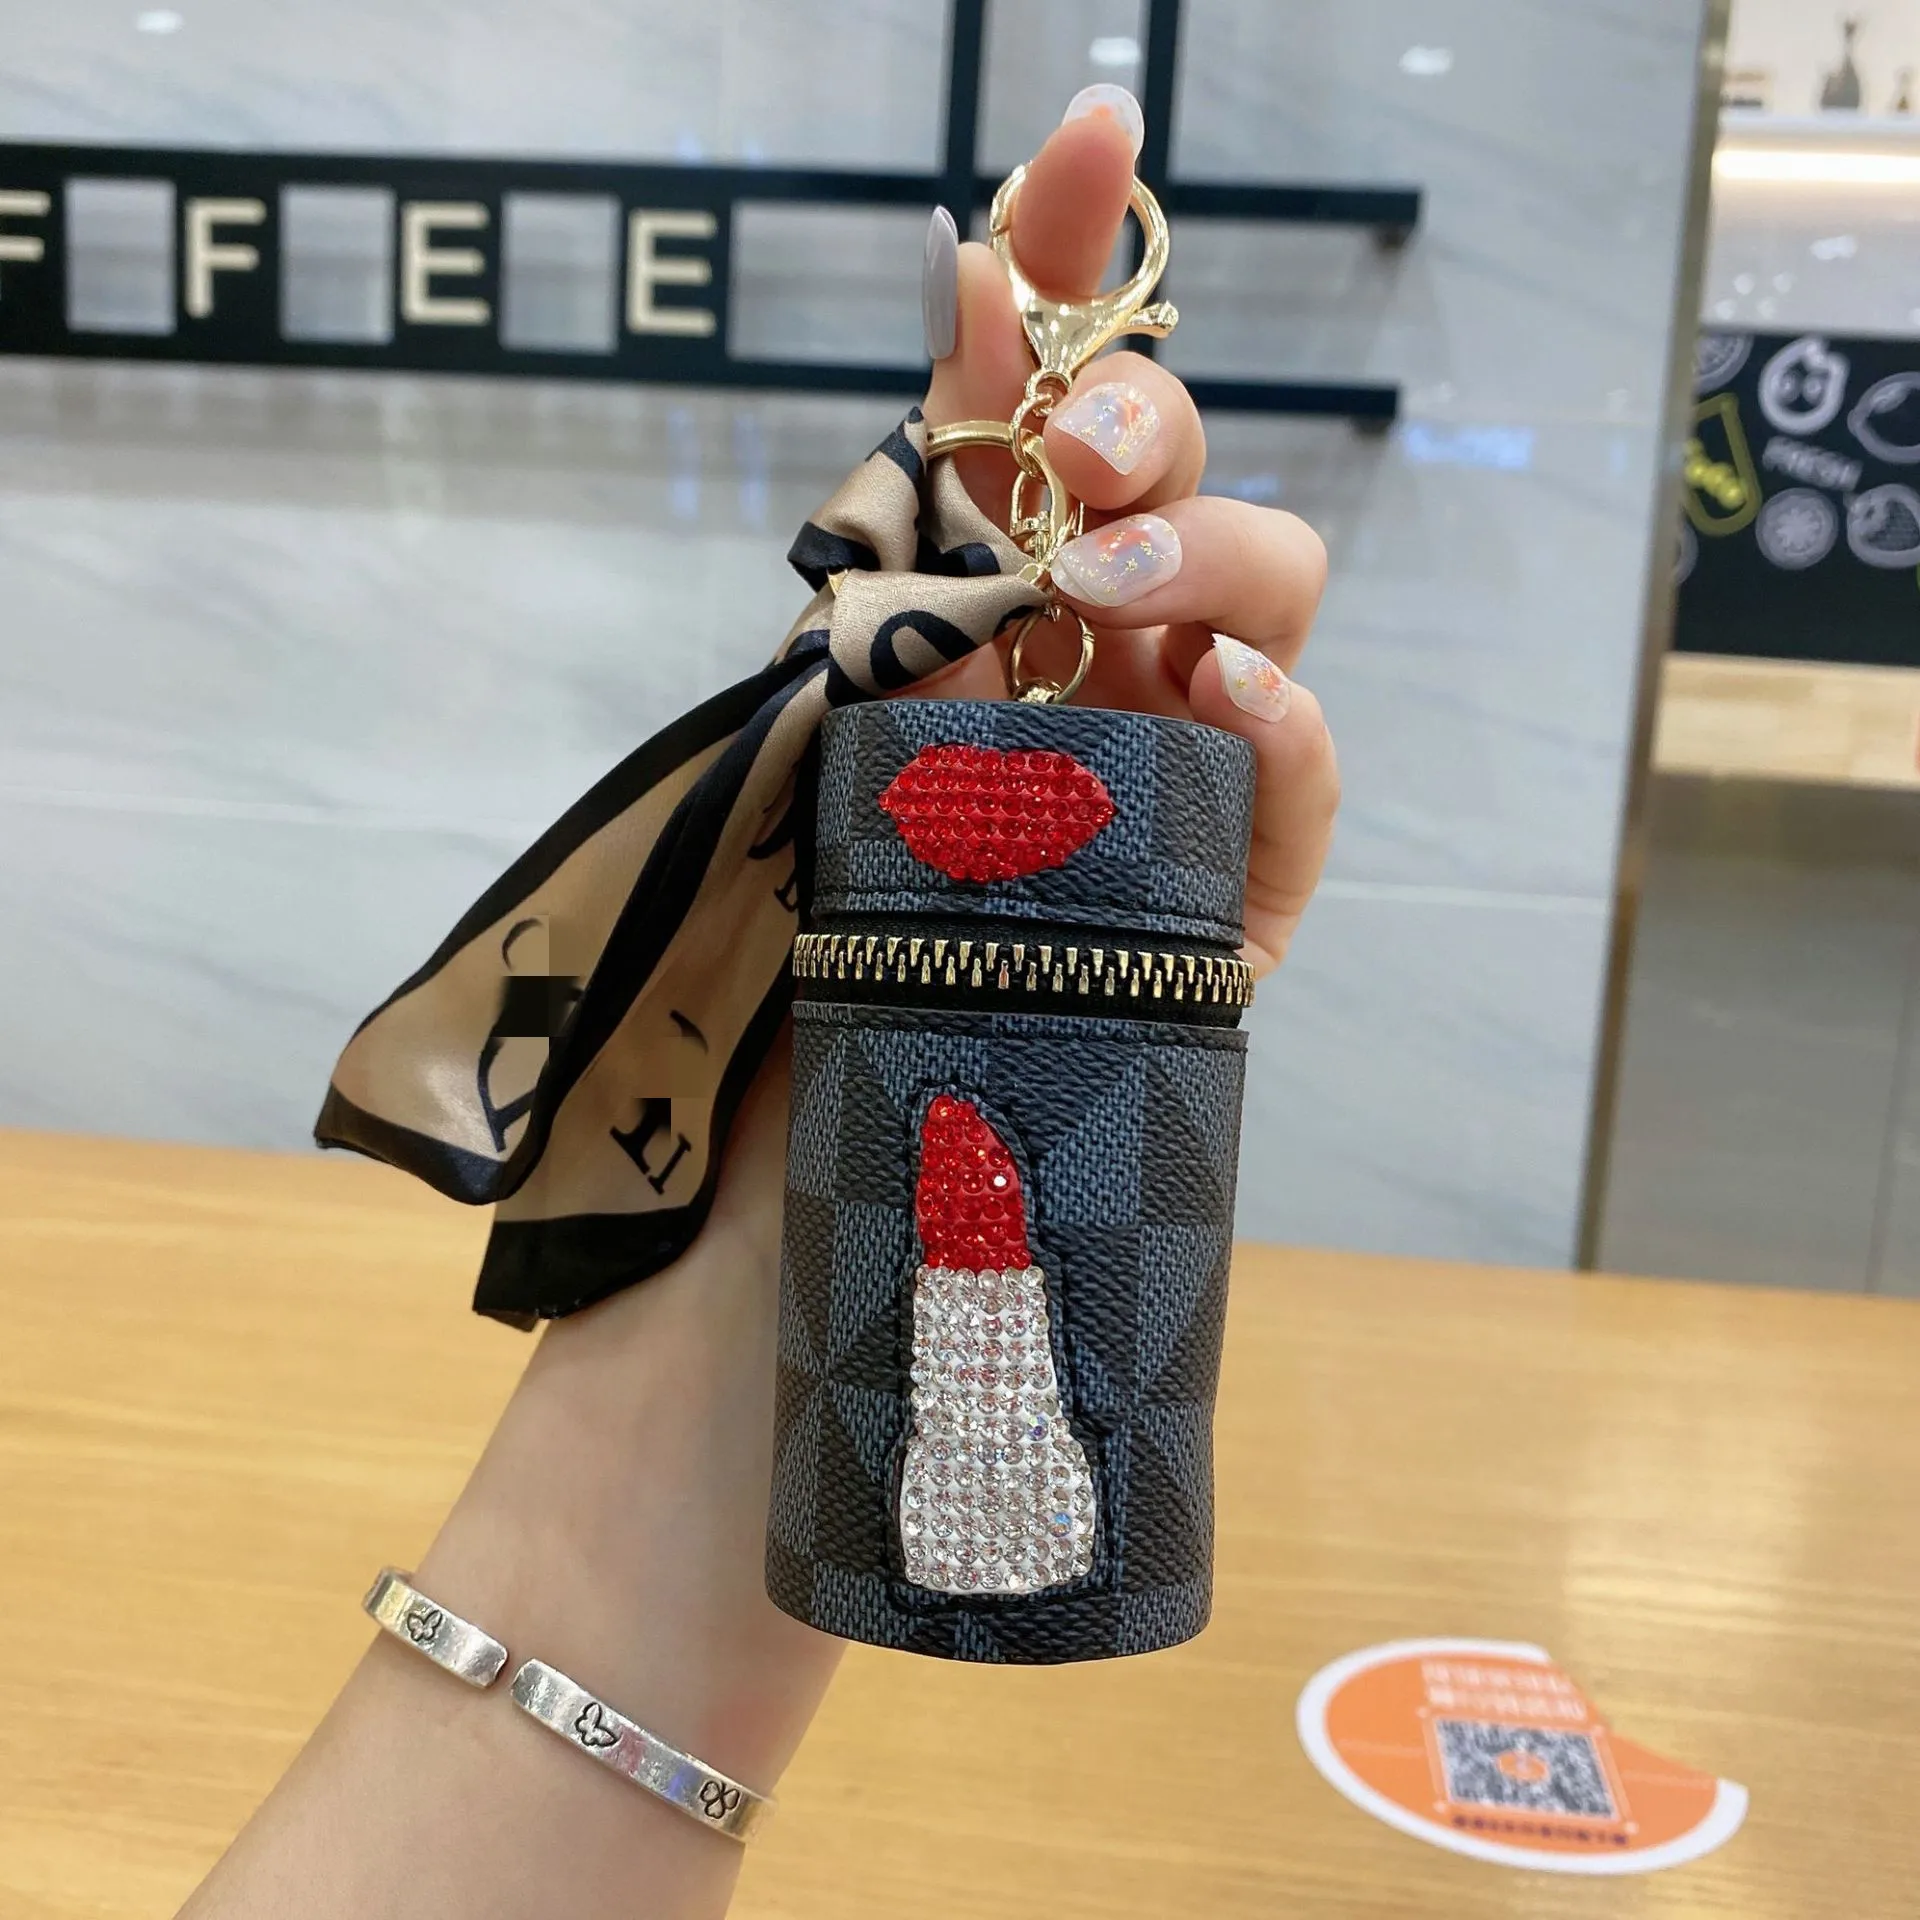 Wholesale creative Designer leather keychain Mini Cylinder